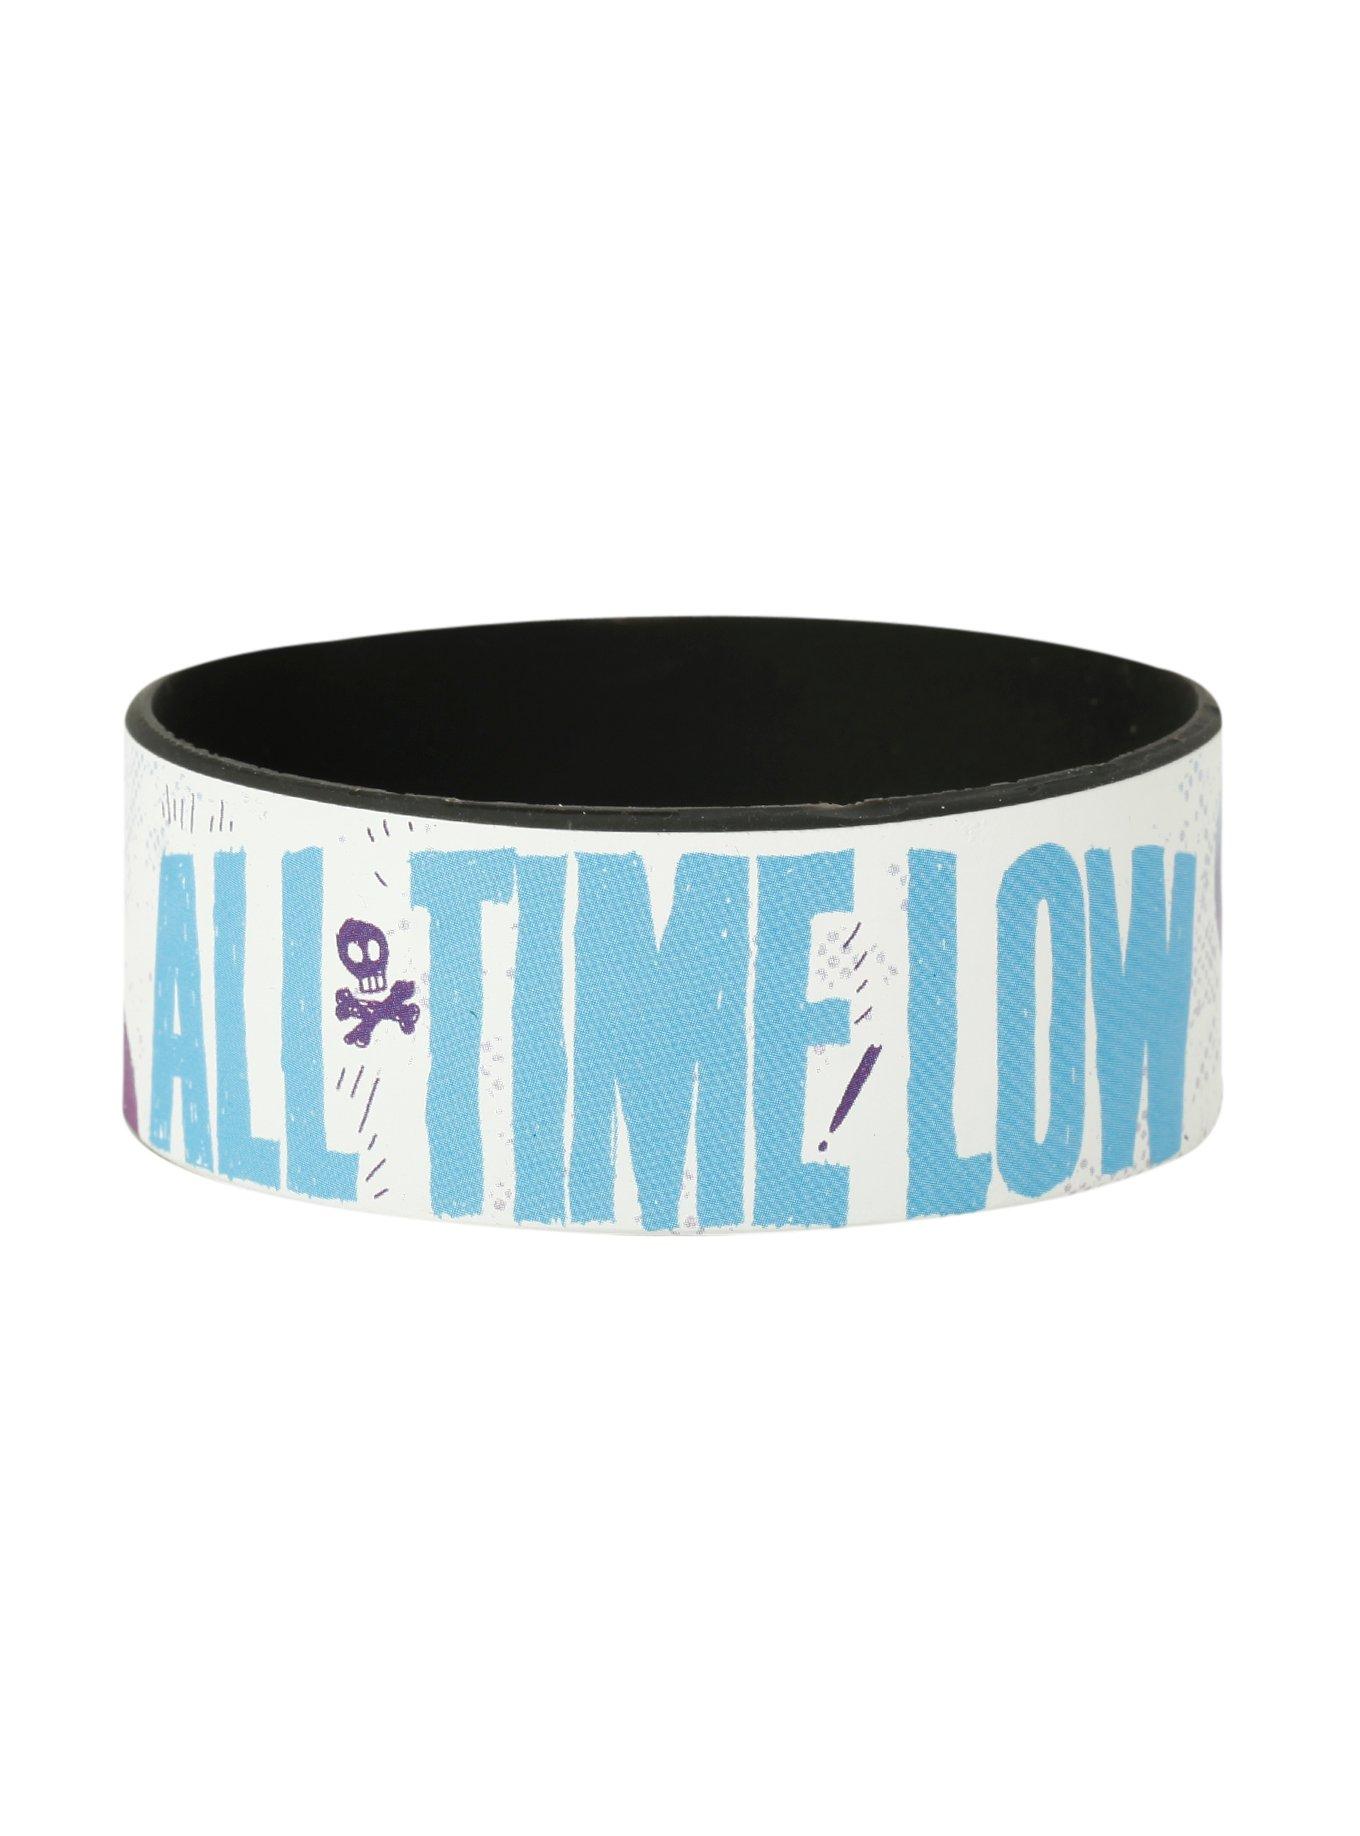 All Time Low Band Image Rubber Bracelet, , hi-res